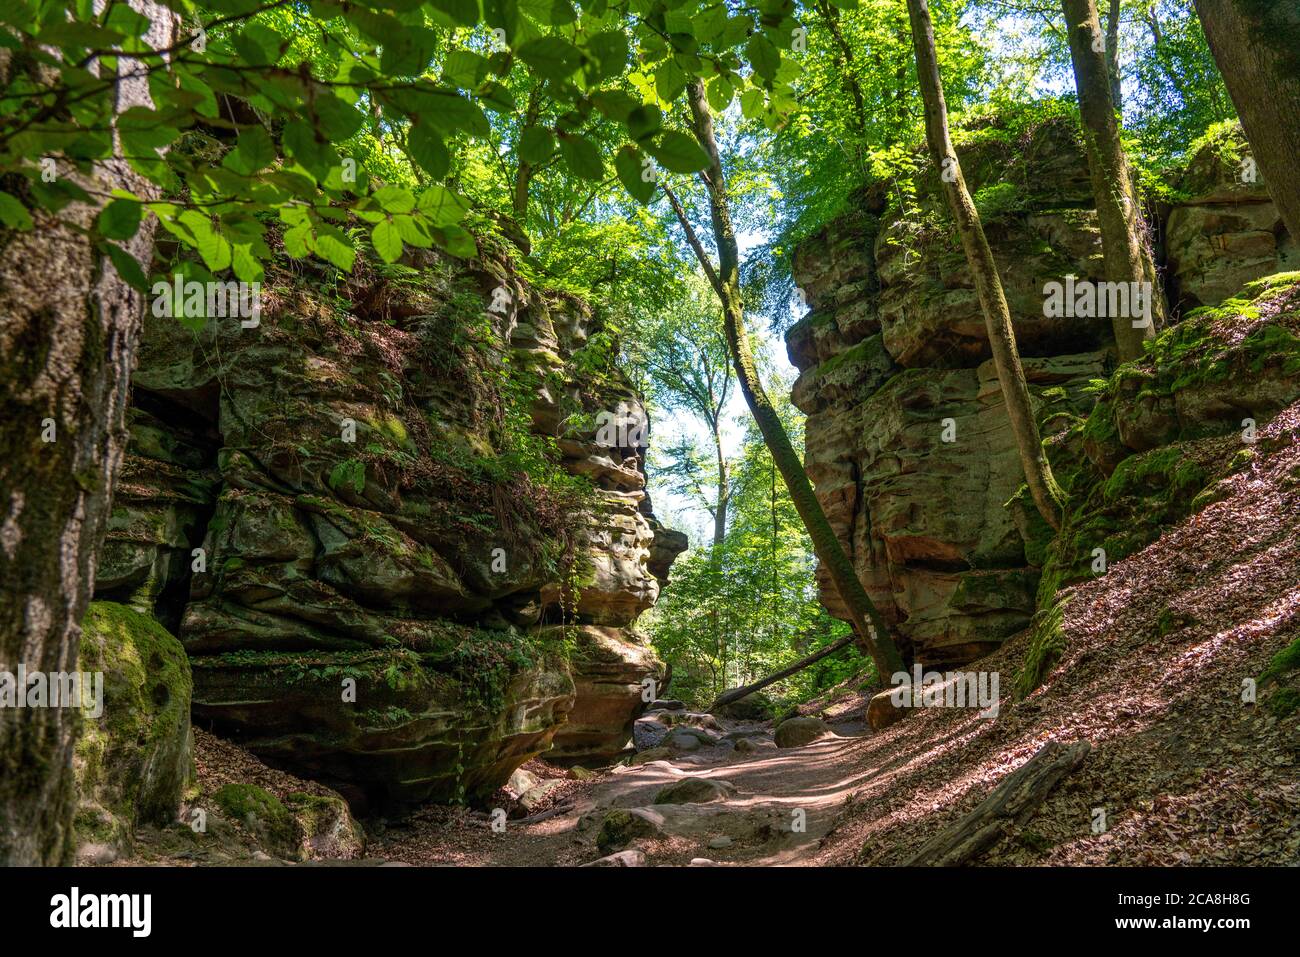 The Devil's Gorge, narrow, passable gorge of sandstone rocks, with steep rocky gorges, near Irrel, Nature Park Südeifel, Rheinland-Pflanz, Germany Stock Photo